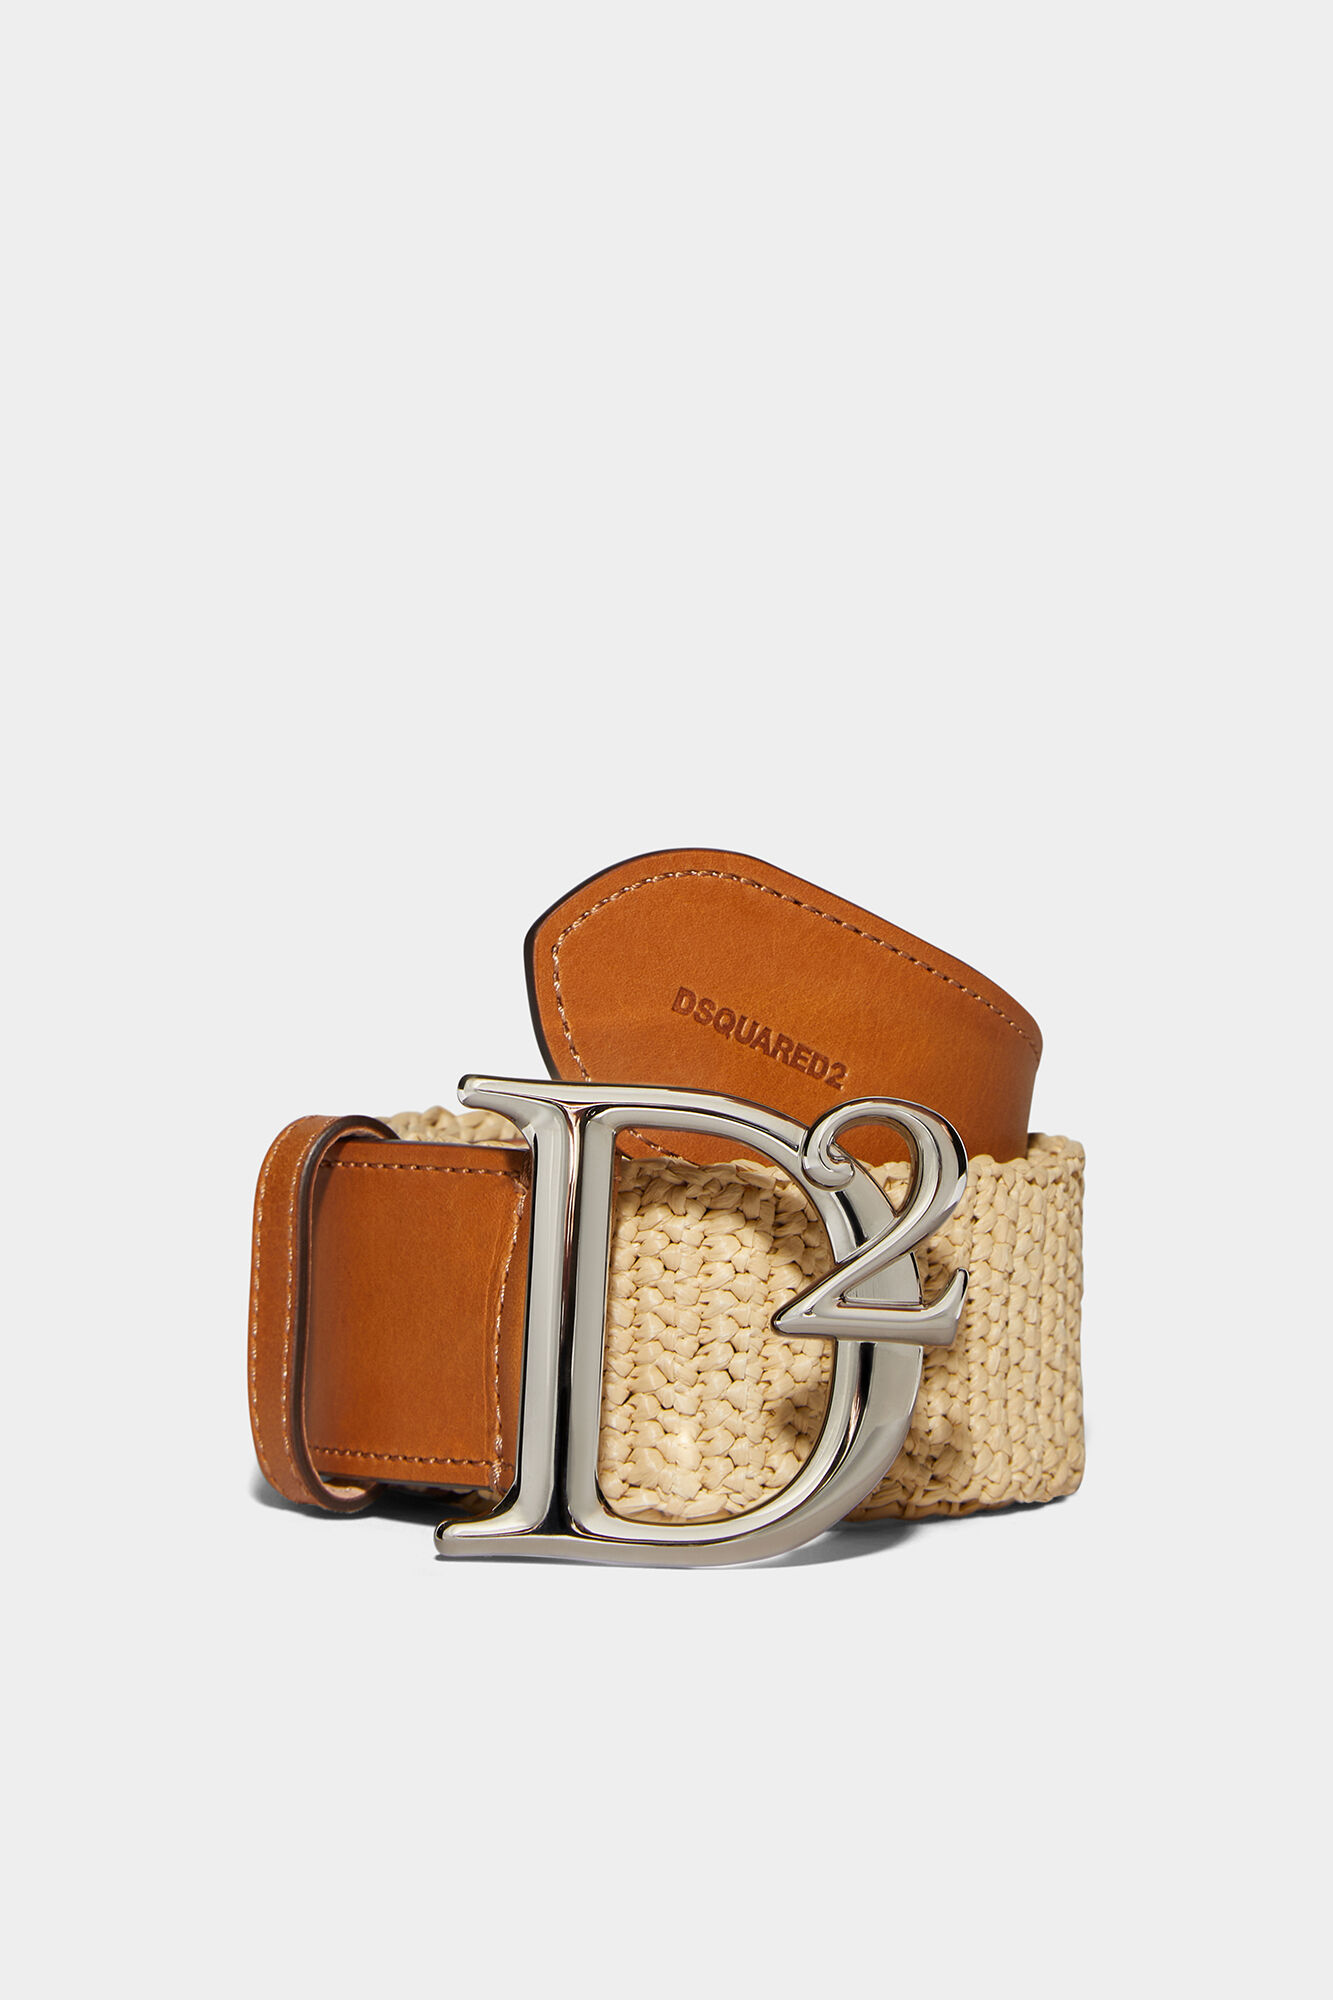 Dsquared2 logo-buckle raffia belt - Brown